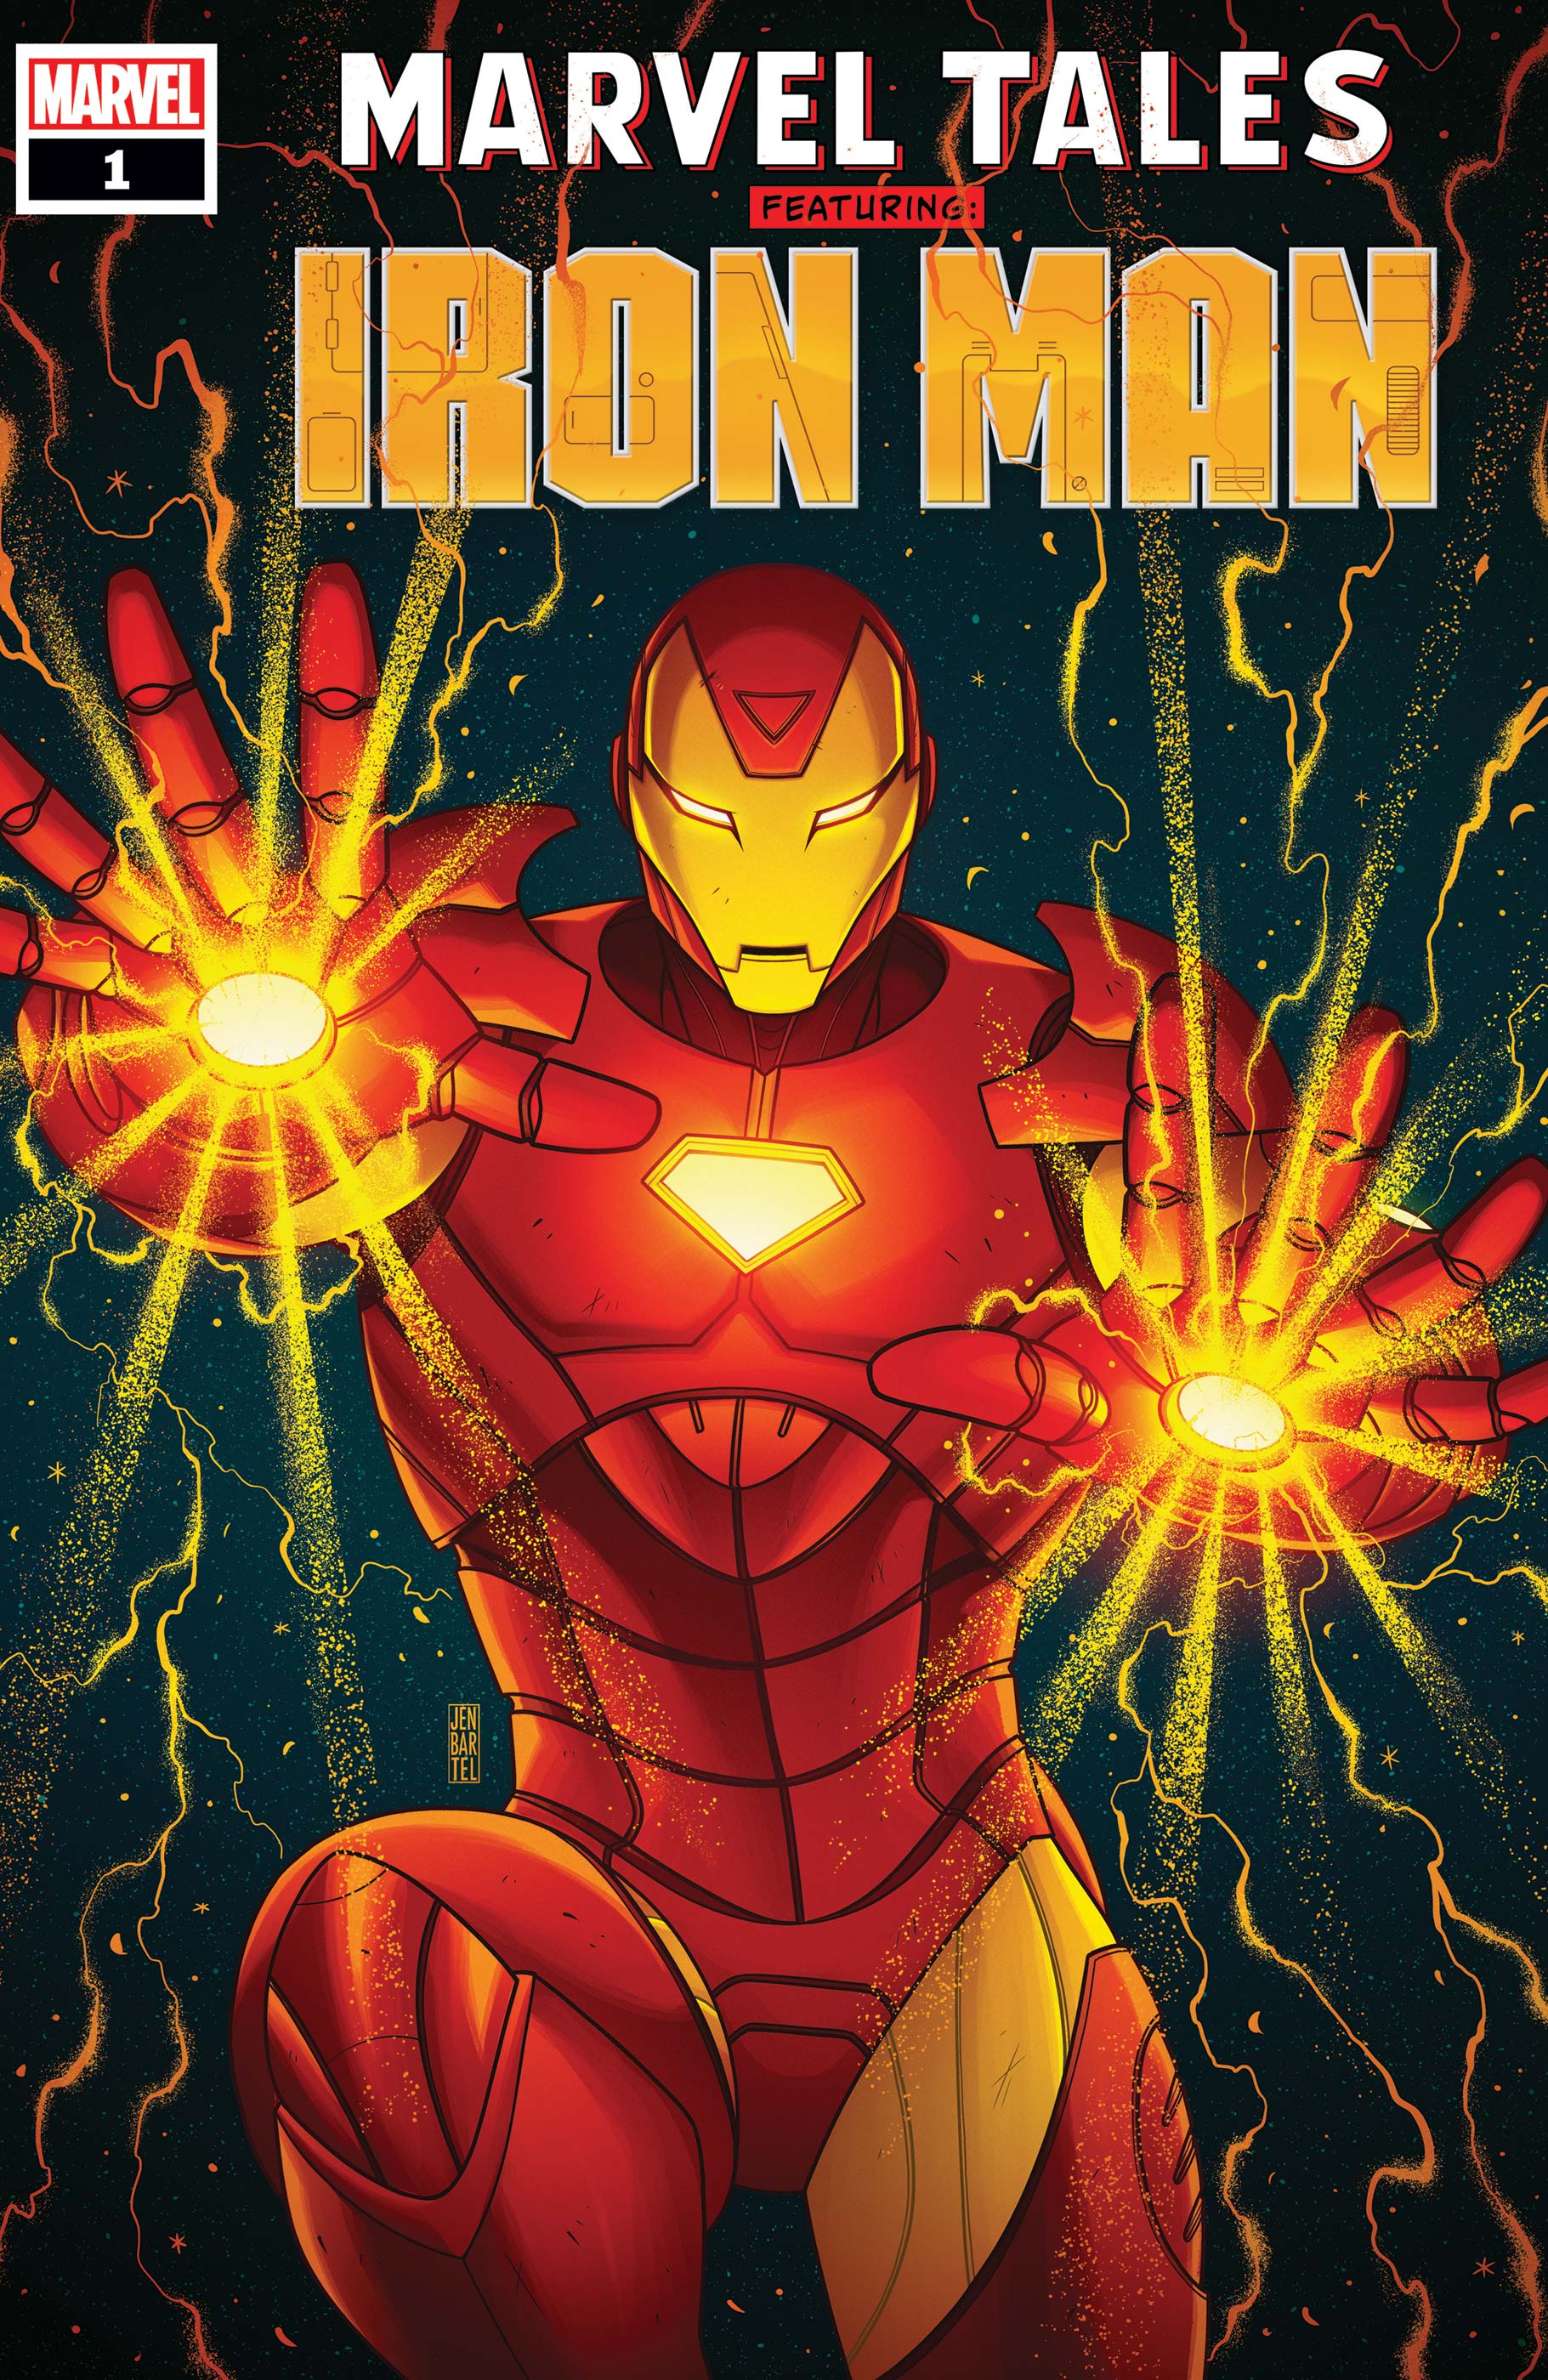 Marvel Tales Iron Man 20 20   Comic Issues   Marvel